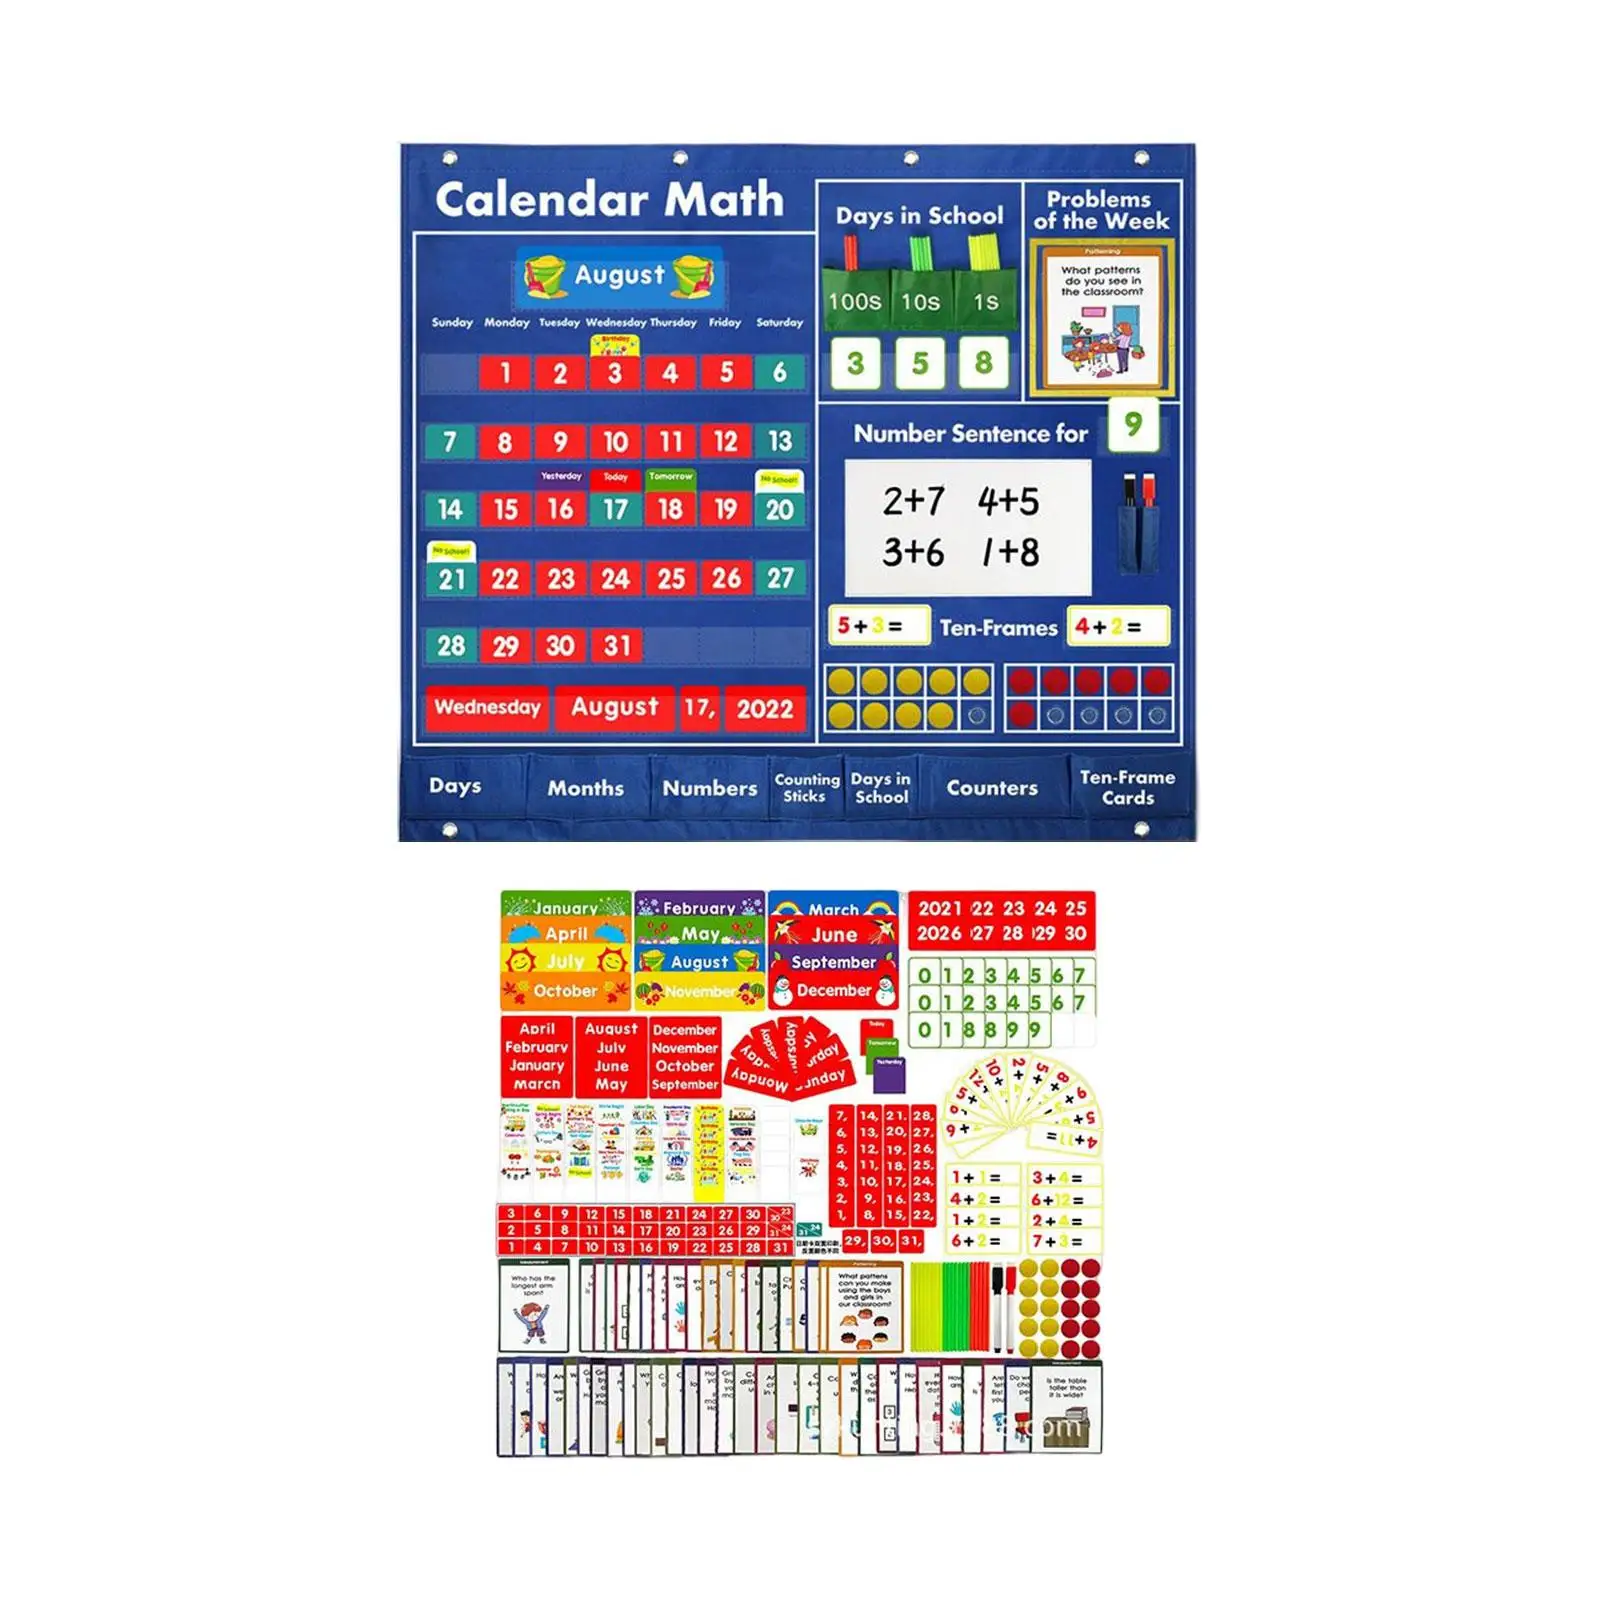 Daily Math Calendar Classroom Pocket Chart 249 Learning Cards Teaching Materials for Elementary Daily Math Activities Preschool